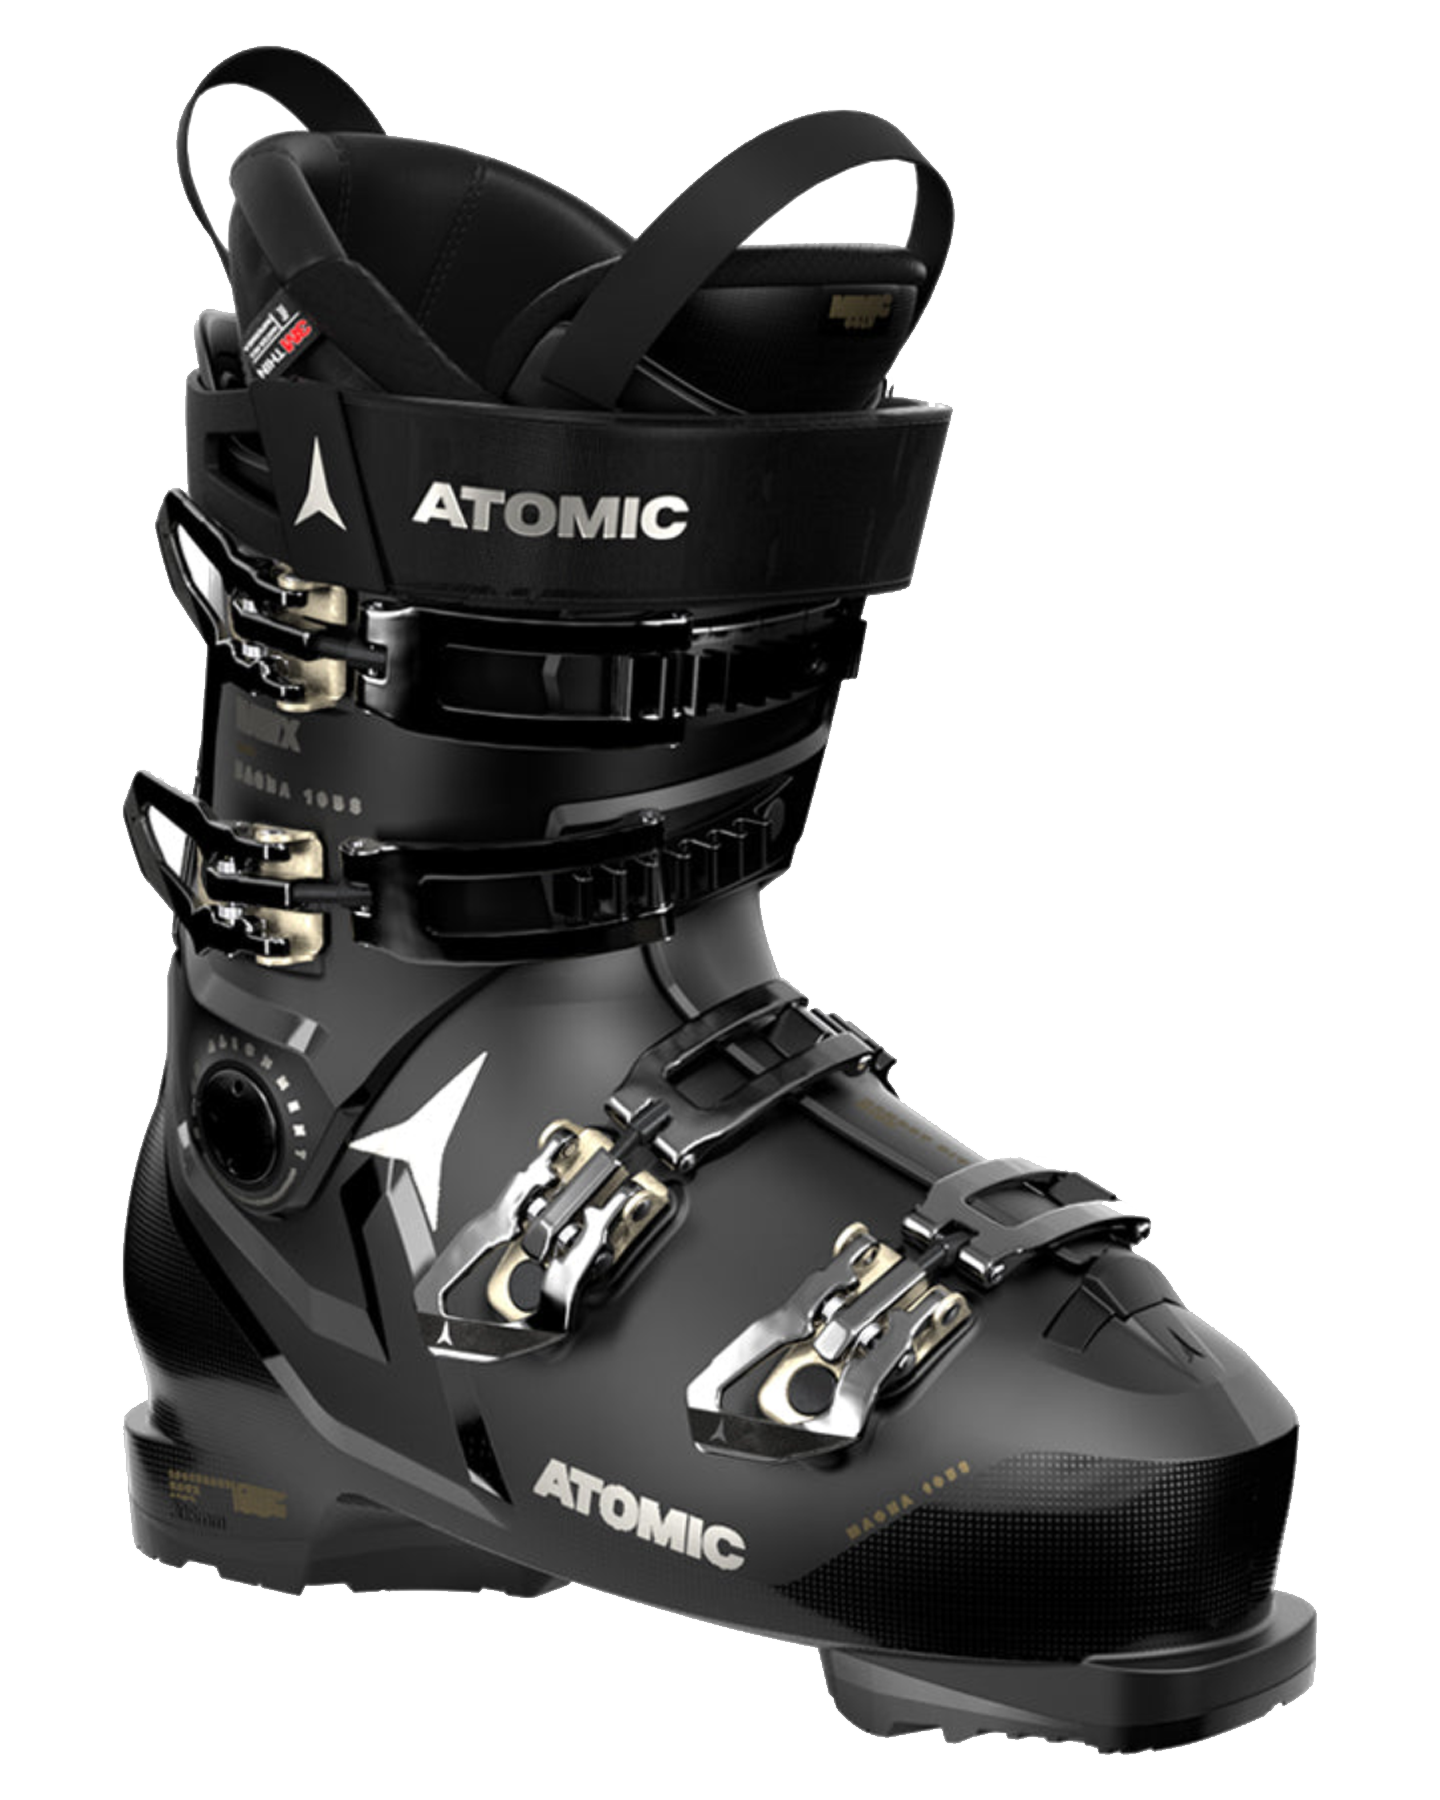 Atomic Hawx Magna 105 S Gripwalk Women's Ski Boots - Black - 2024 Women's Snow Ski Boots - SnowSkiersWarehouse